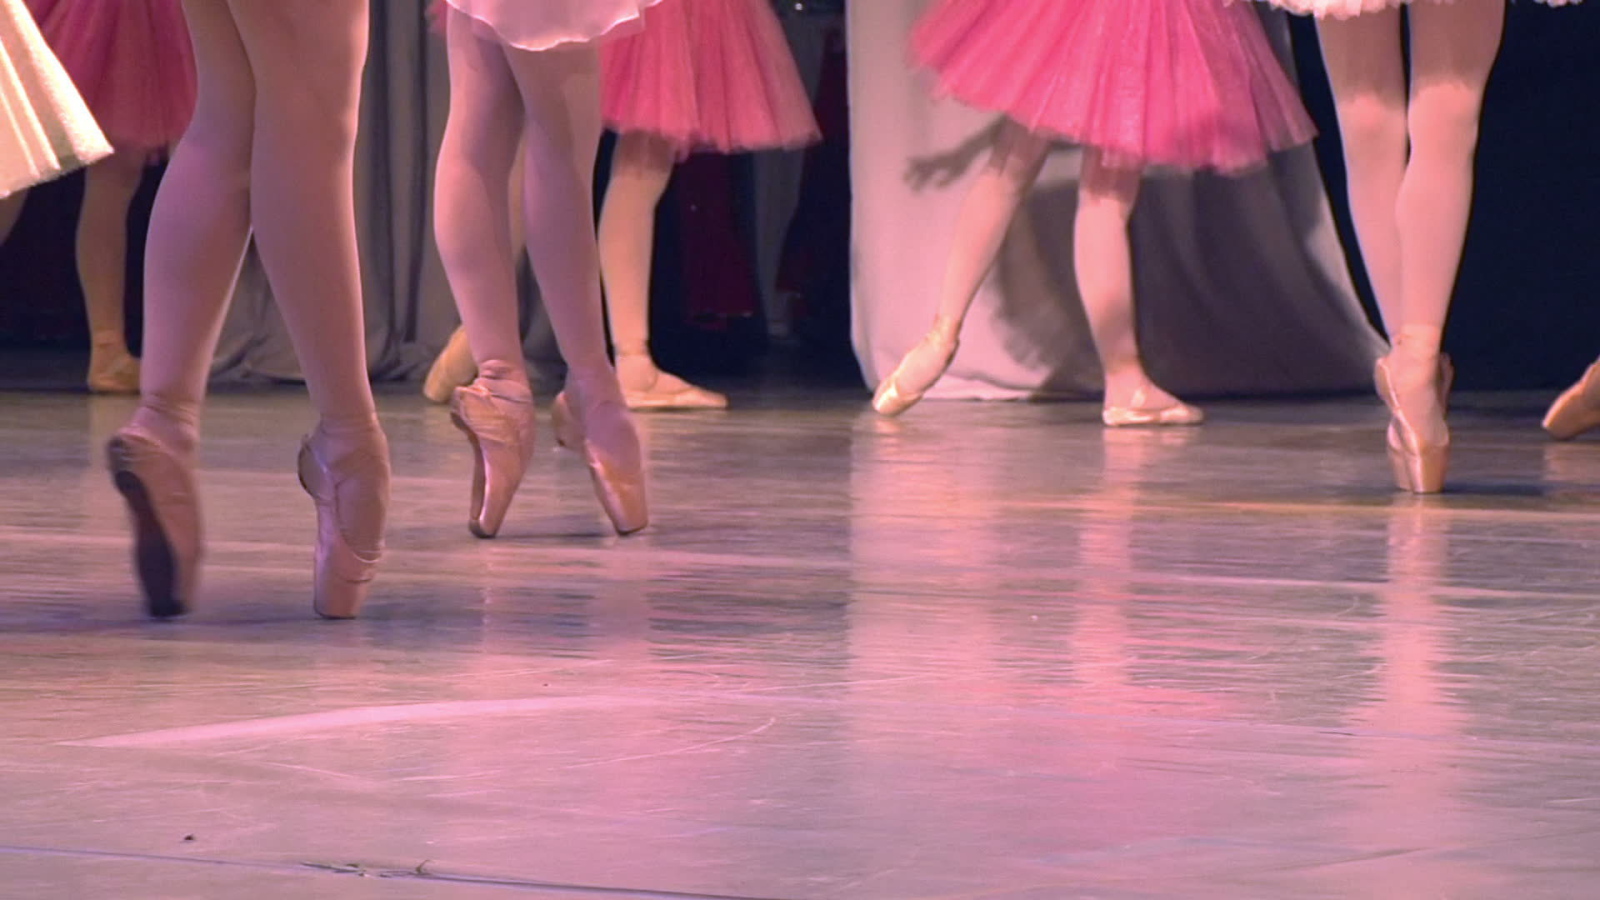 Dancers legs